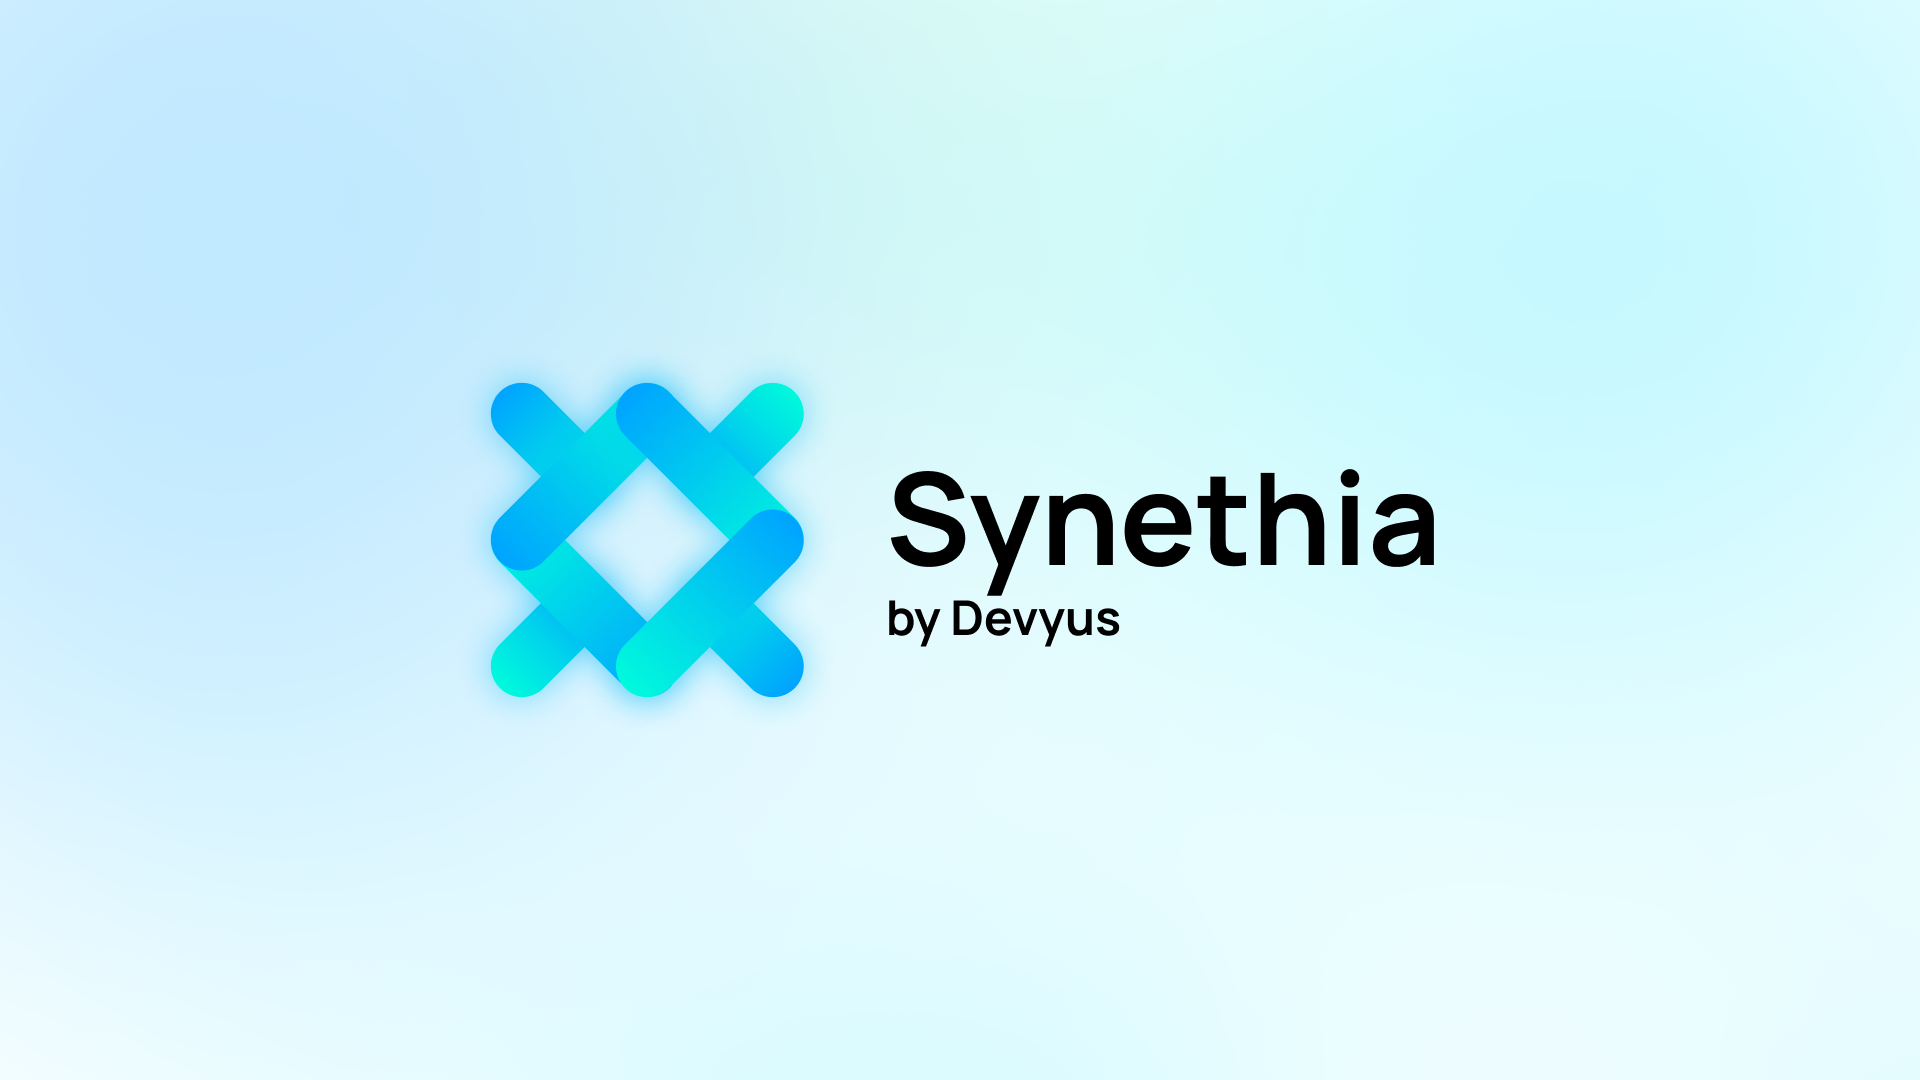 Synethia is now part of Devyus